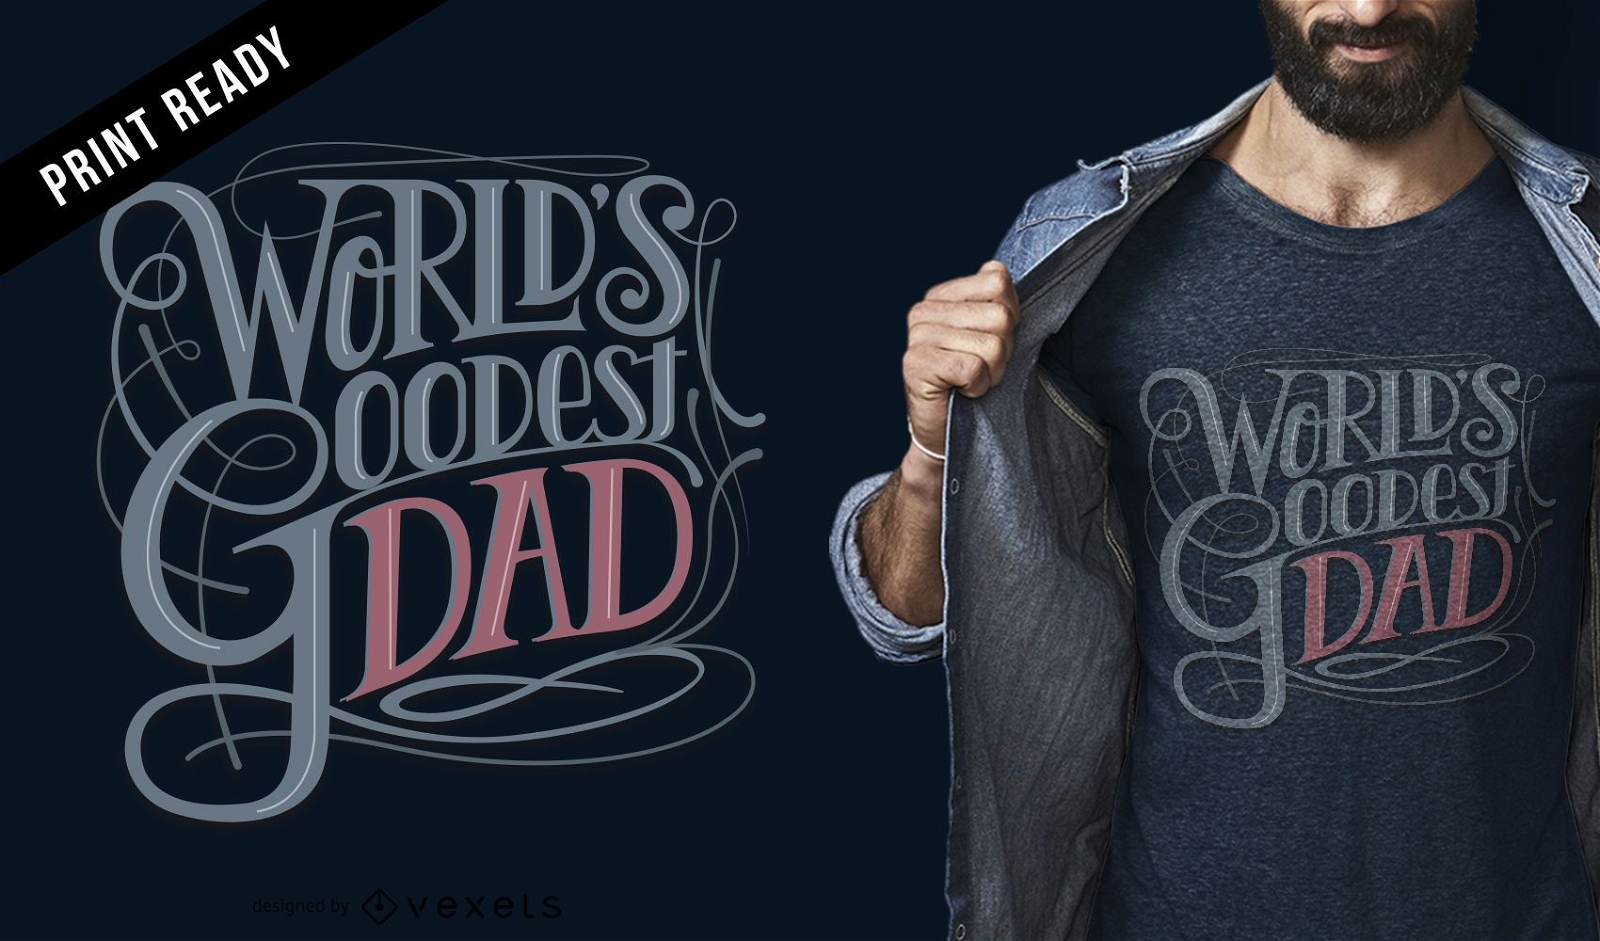 Goodest dad t-shirt design